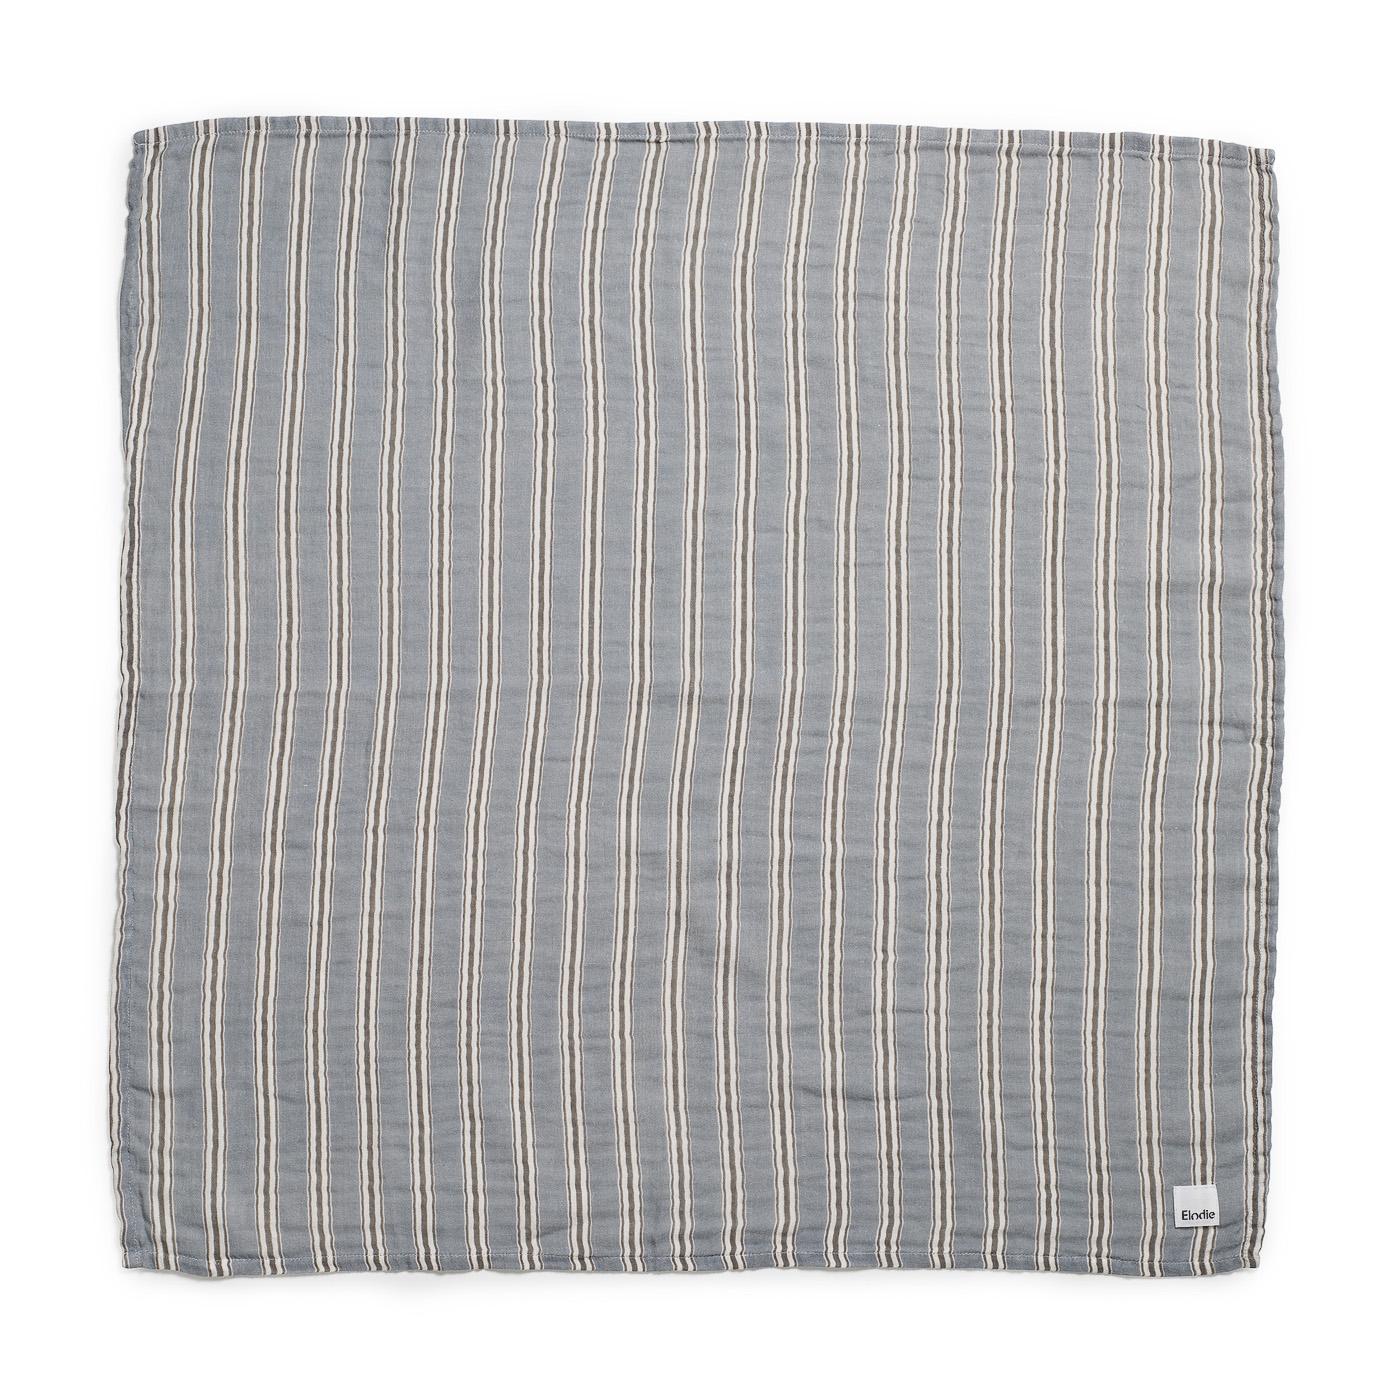 Elodie Details Bamboo Blanket  Sandy Stripe One Size Blue/Beige/Black - Elodie Details